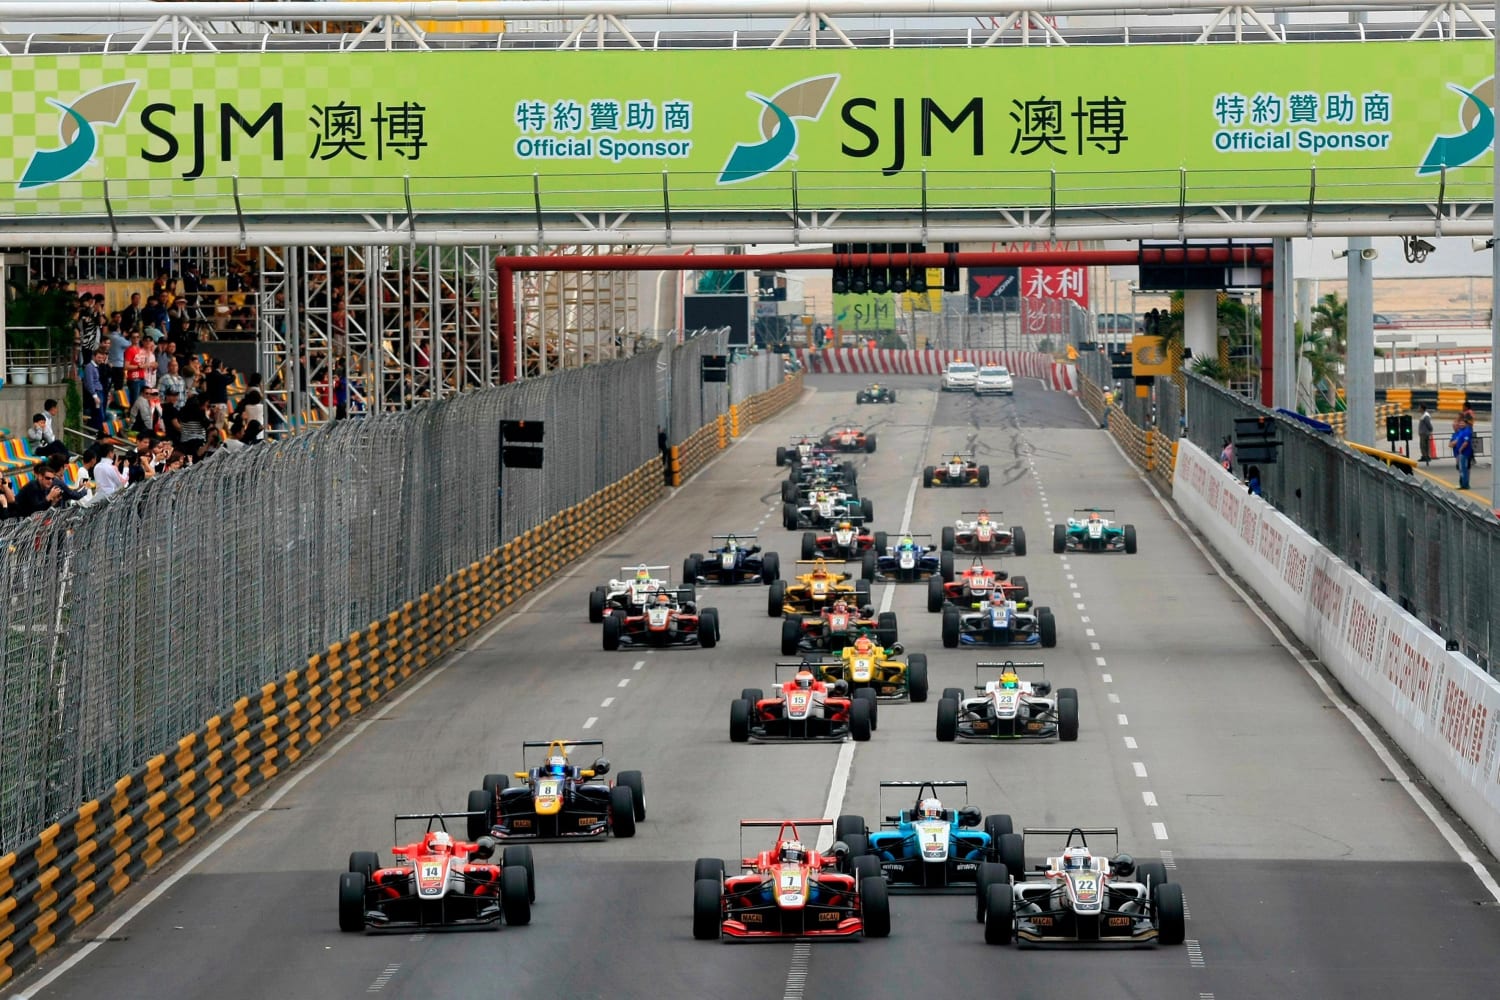 Macau Grand Prix: The greatest wins